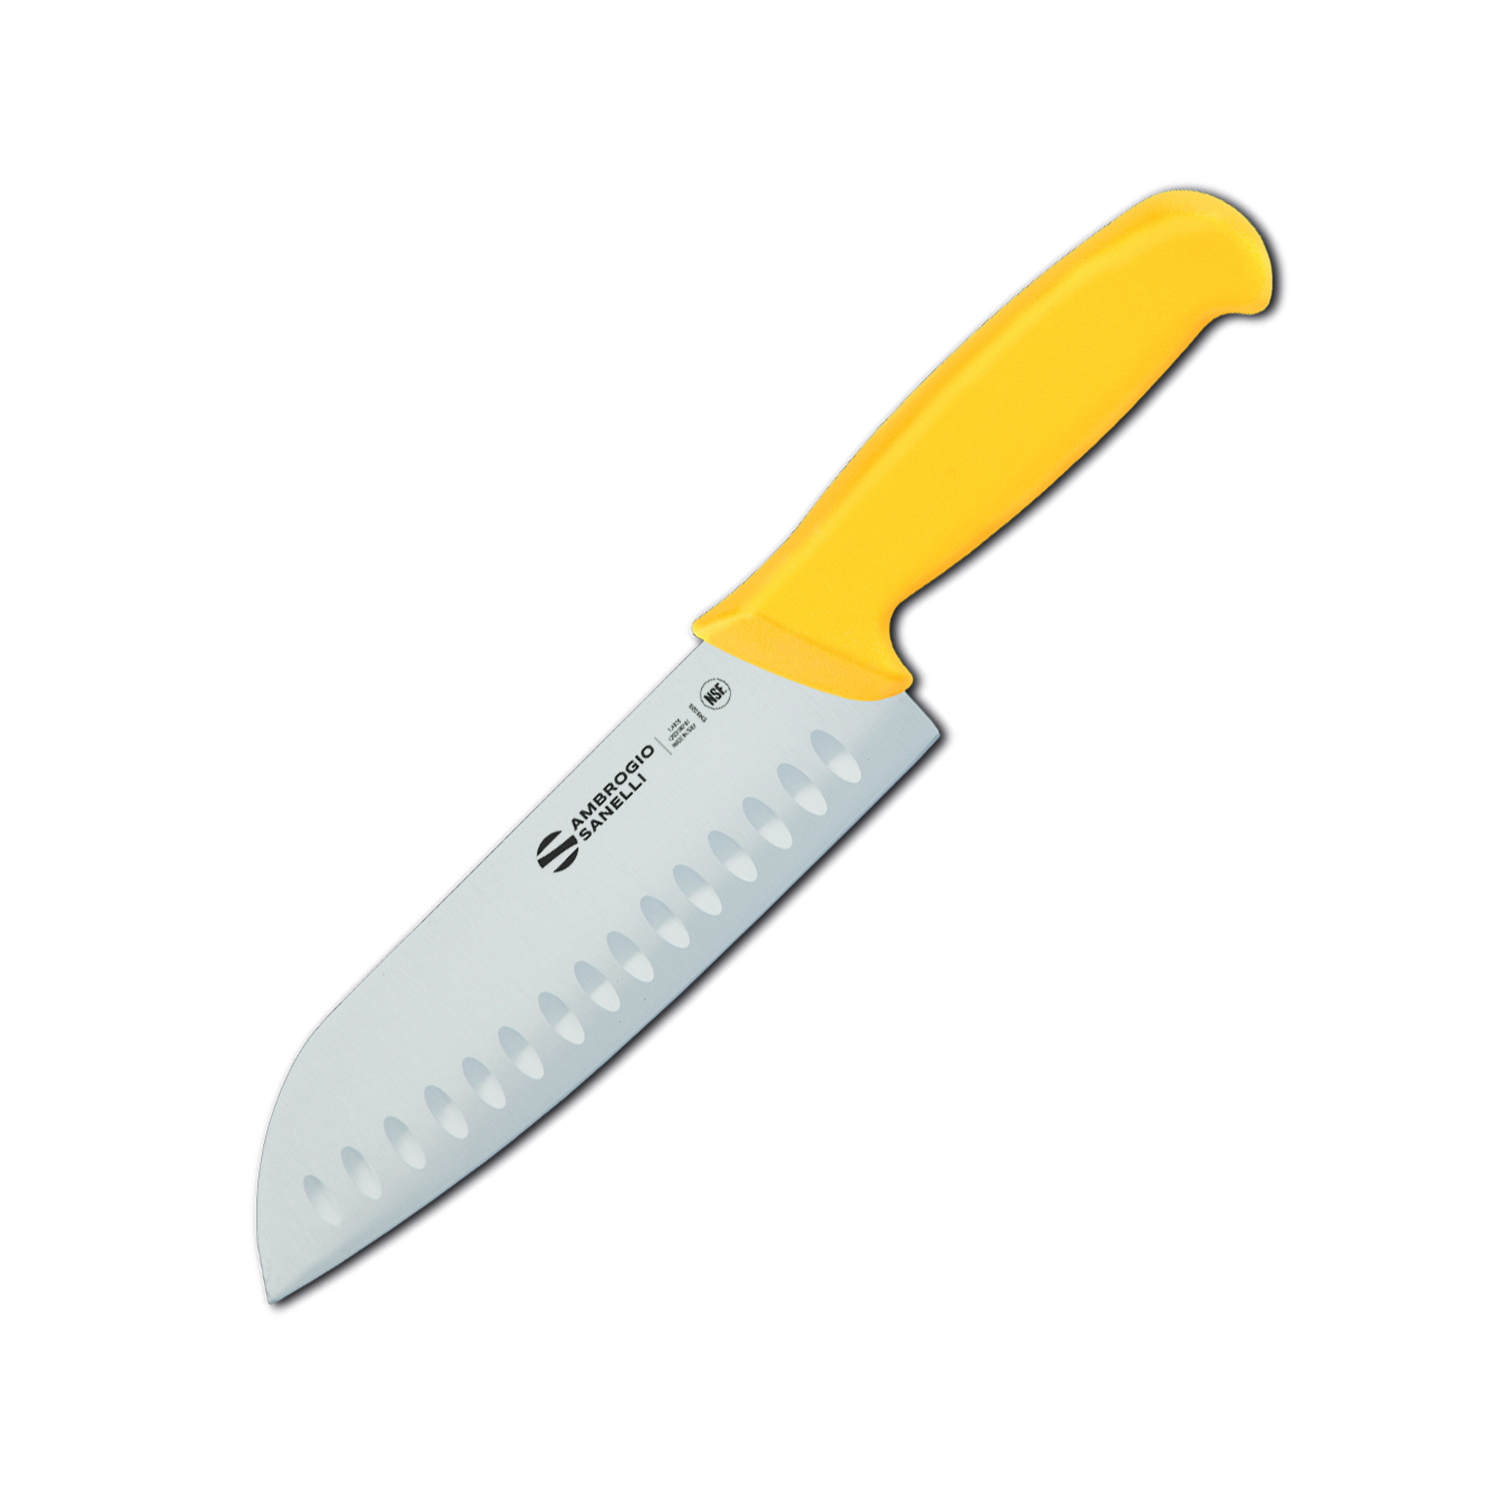 Нож Сантоку Sanelli Ambrogio Supra особое лезвие грантон 18 см Желтый (77990)